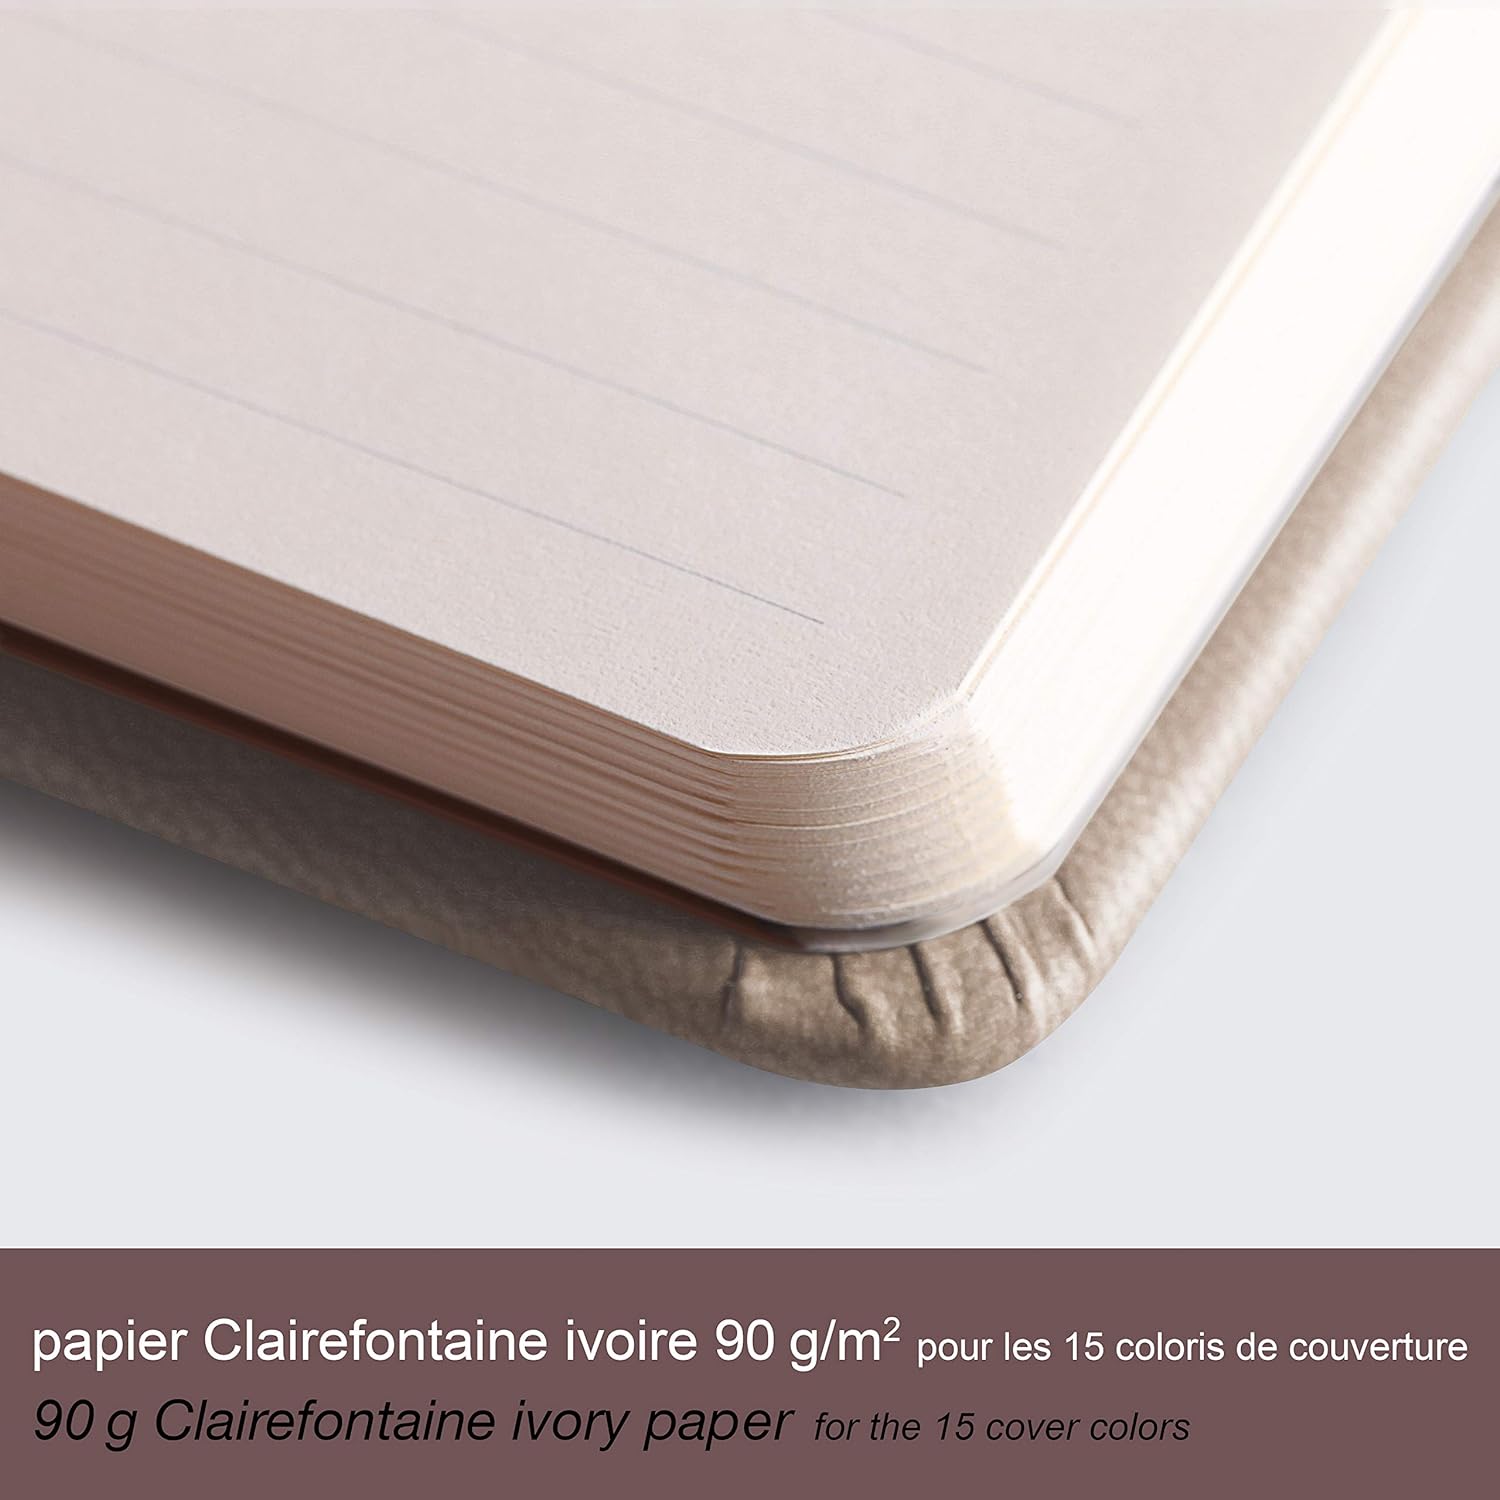 RHODIArama Webnotebook A6 Ivory Lined Hardcover-Chocolate